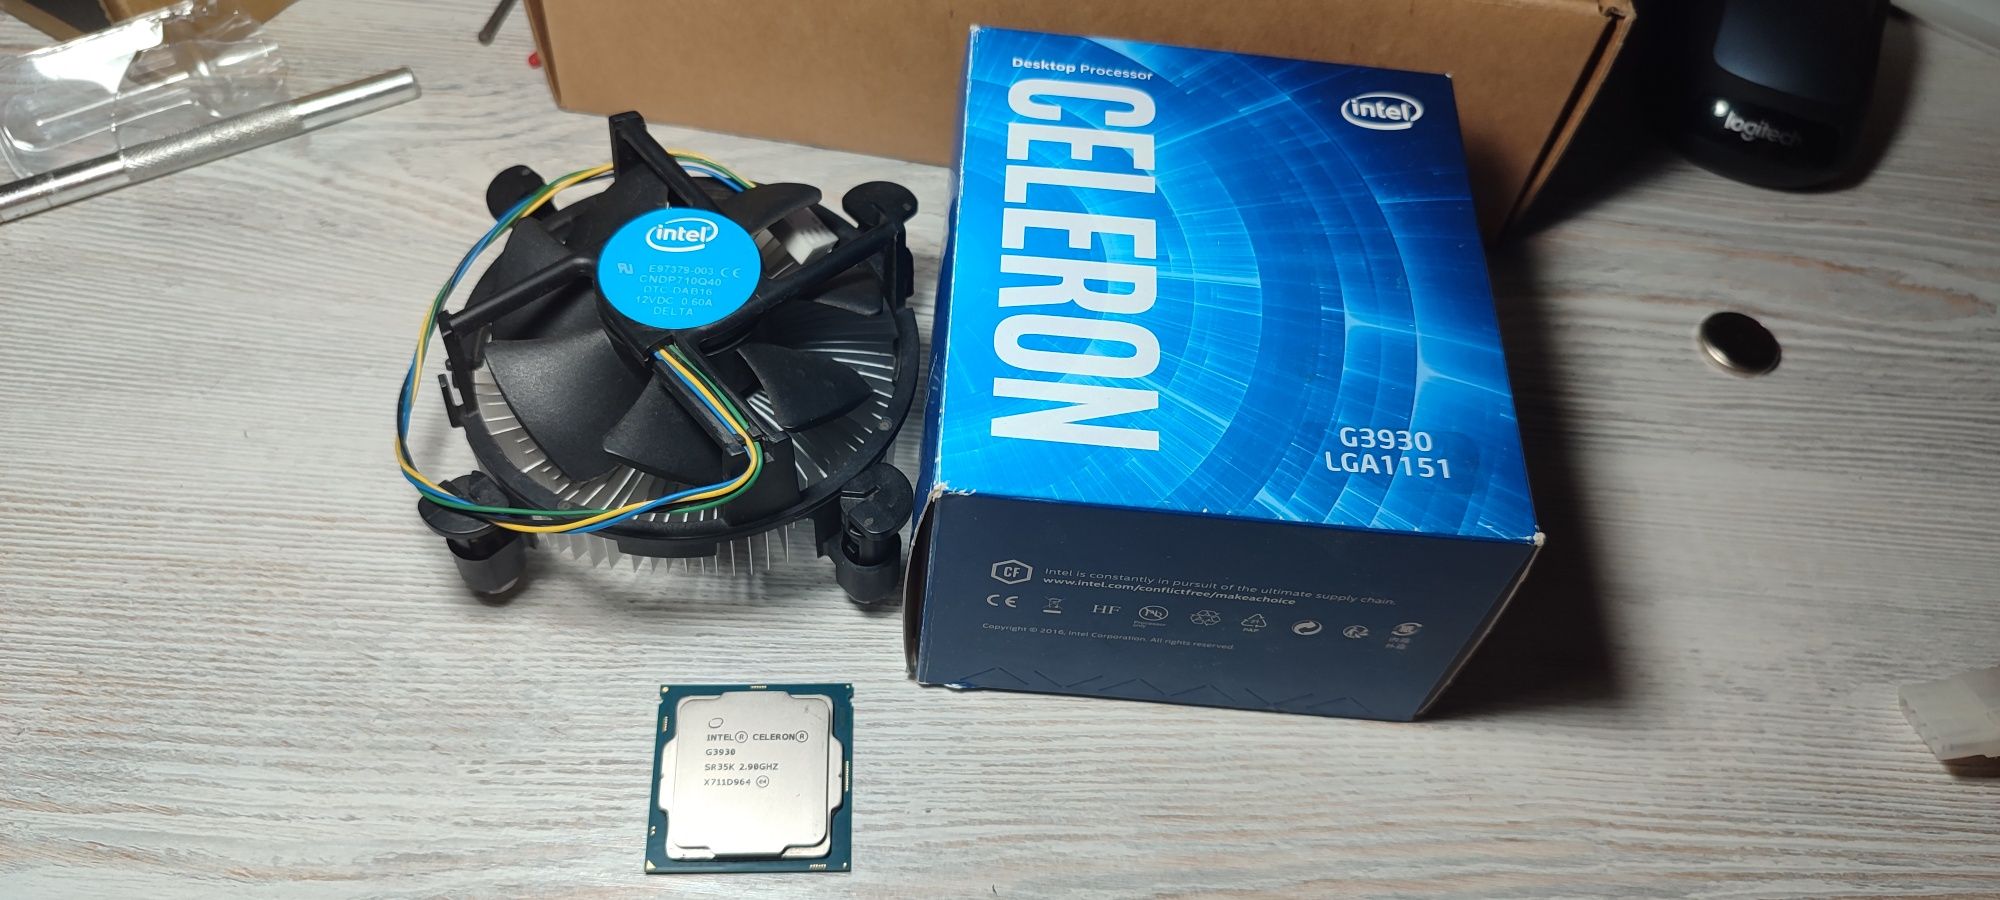 Intel celeron g3930 lga1151 box